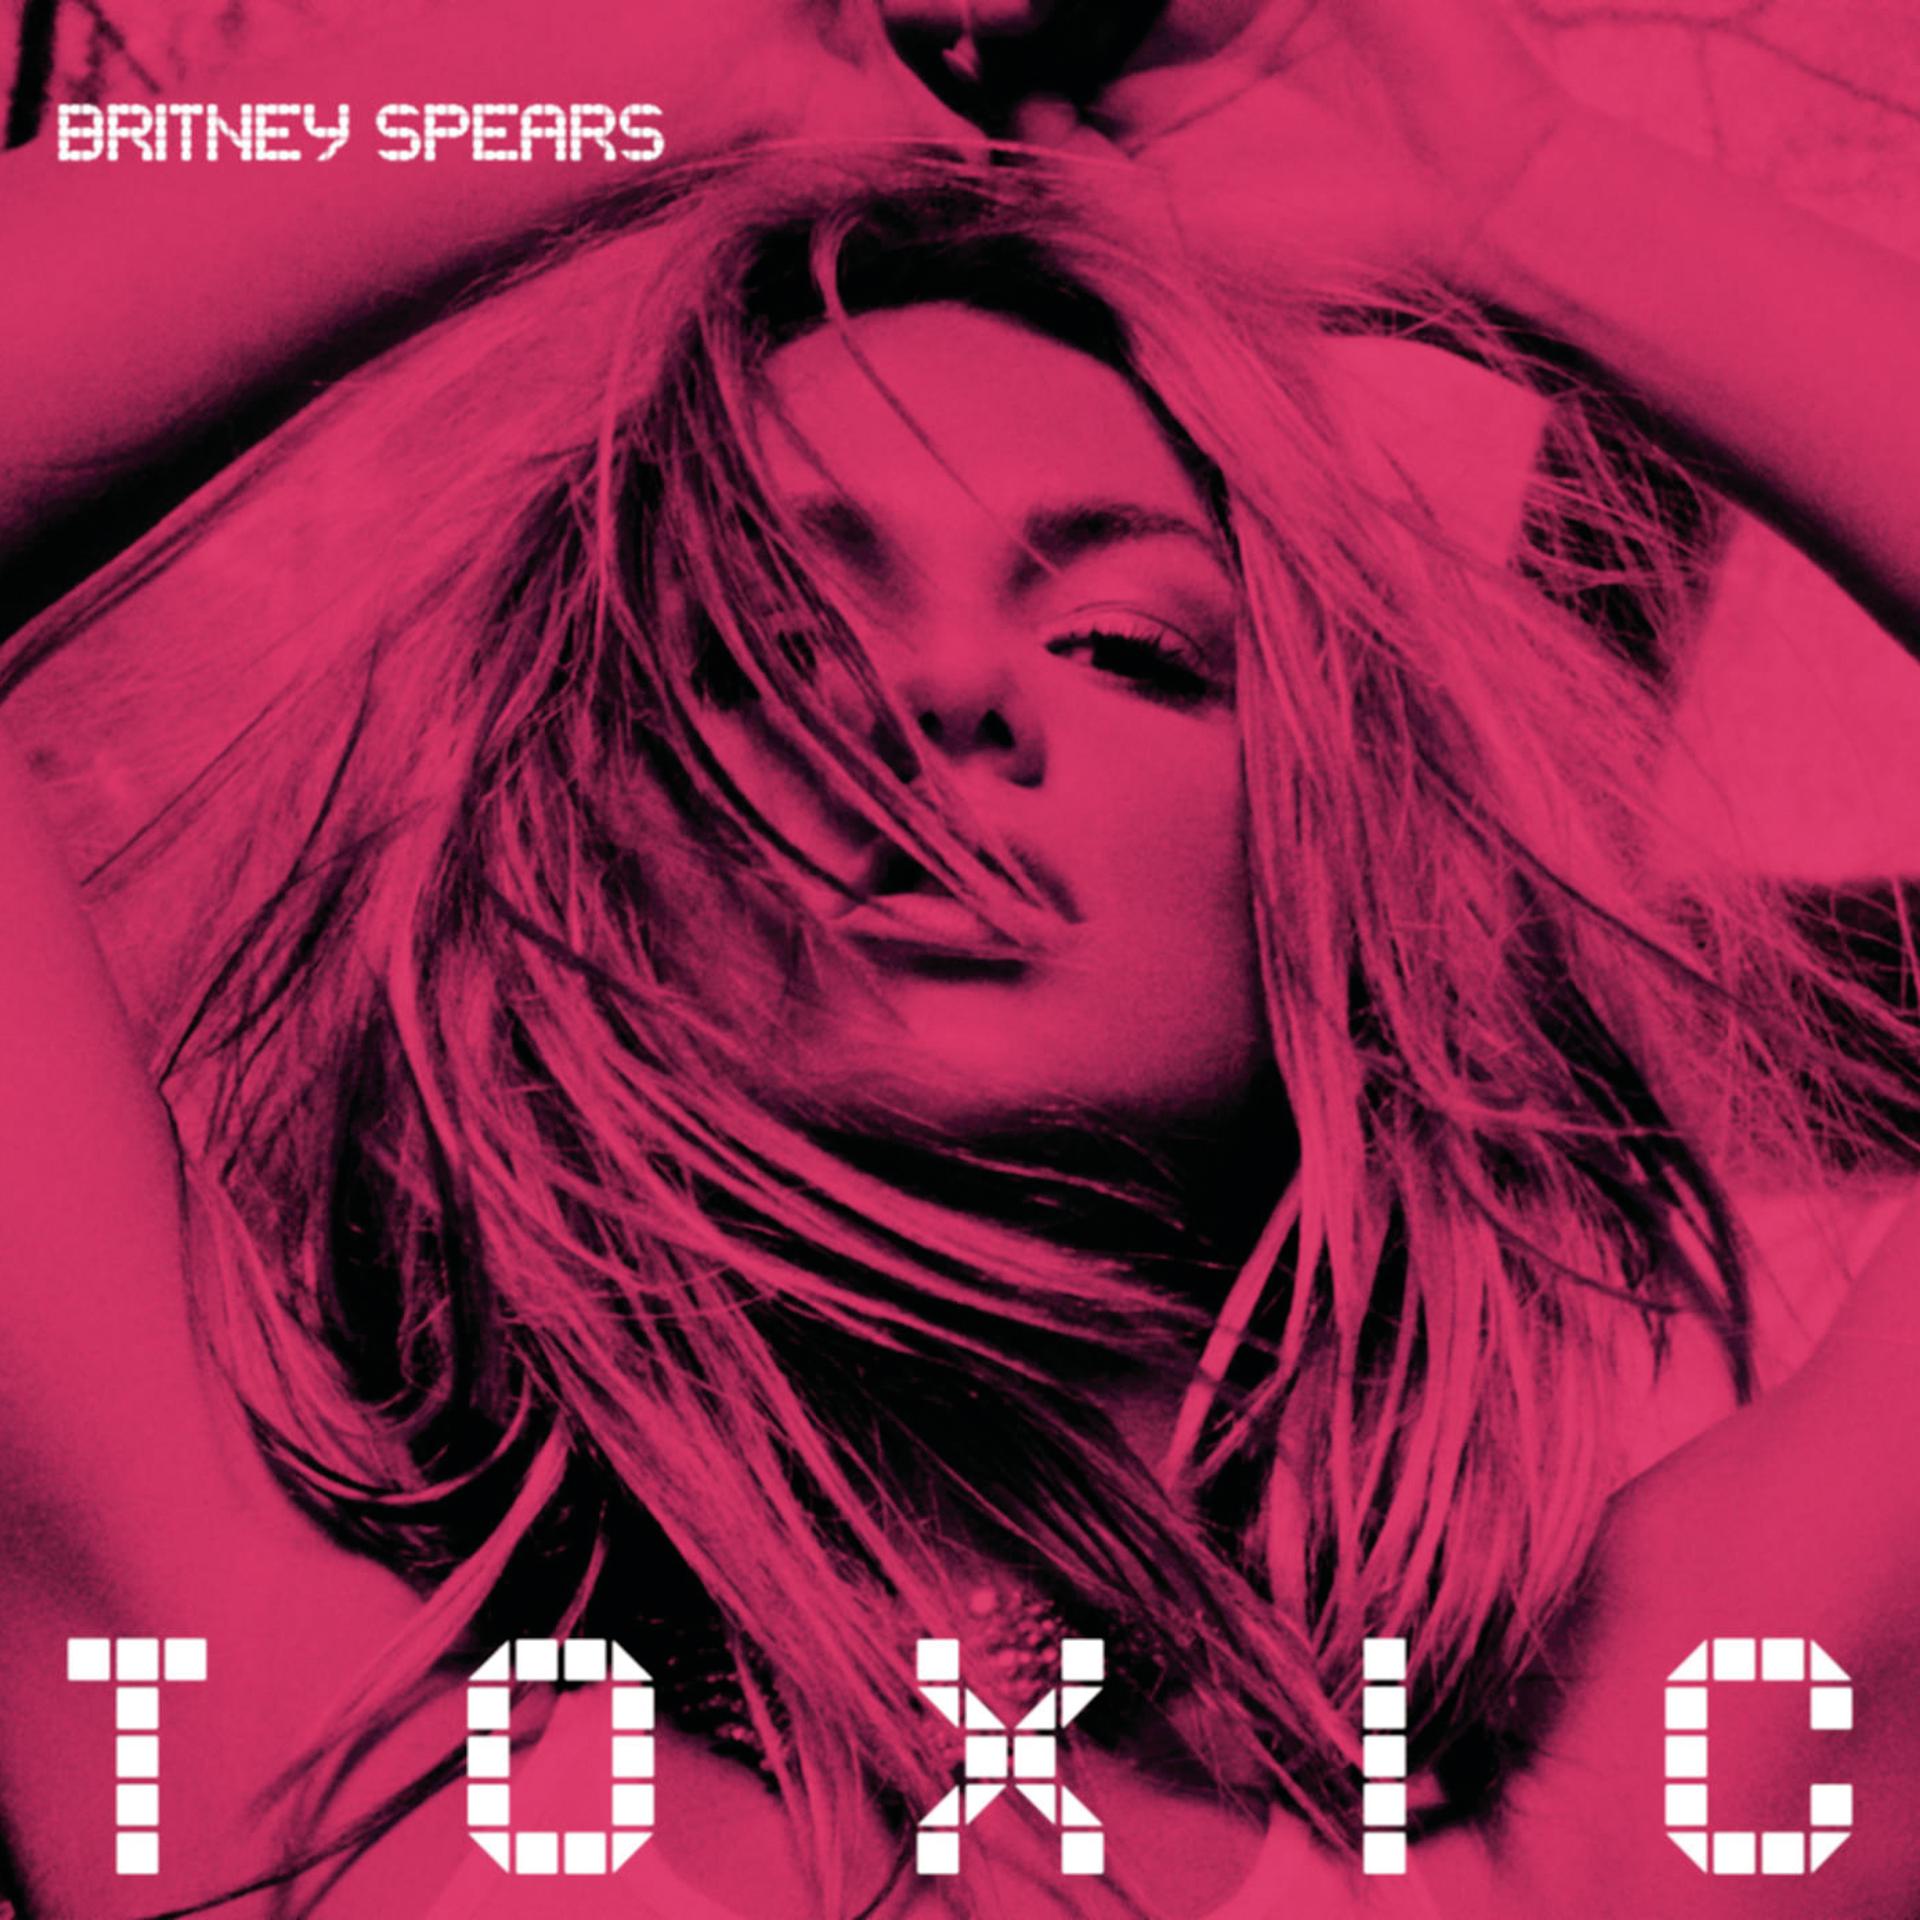 Песня токсик бритни. Toxic Бритни Спирс обложка. Britney Spears Toxic 2004. Бритни Спирс Токсик. Бритни Спирс обложка.